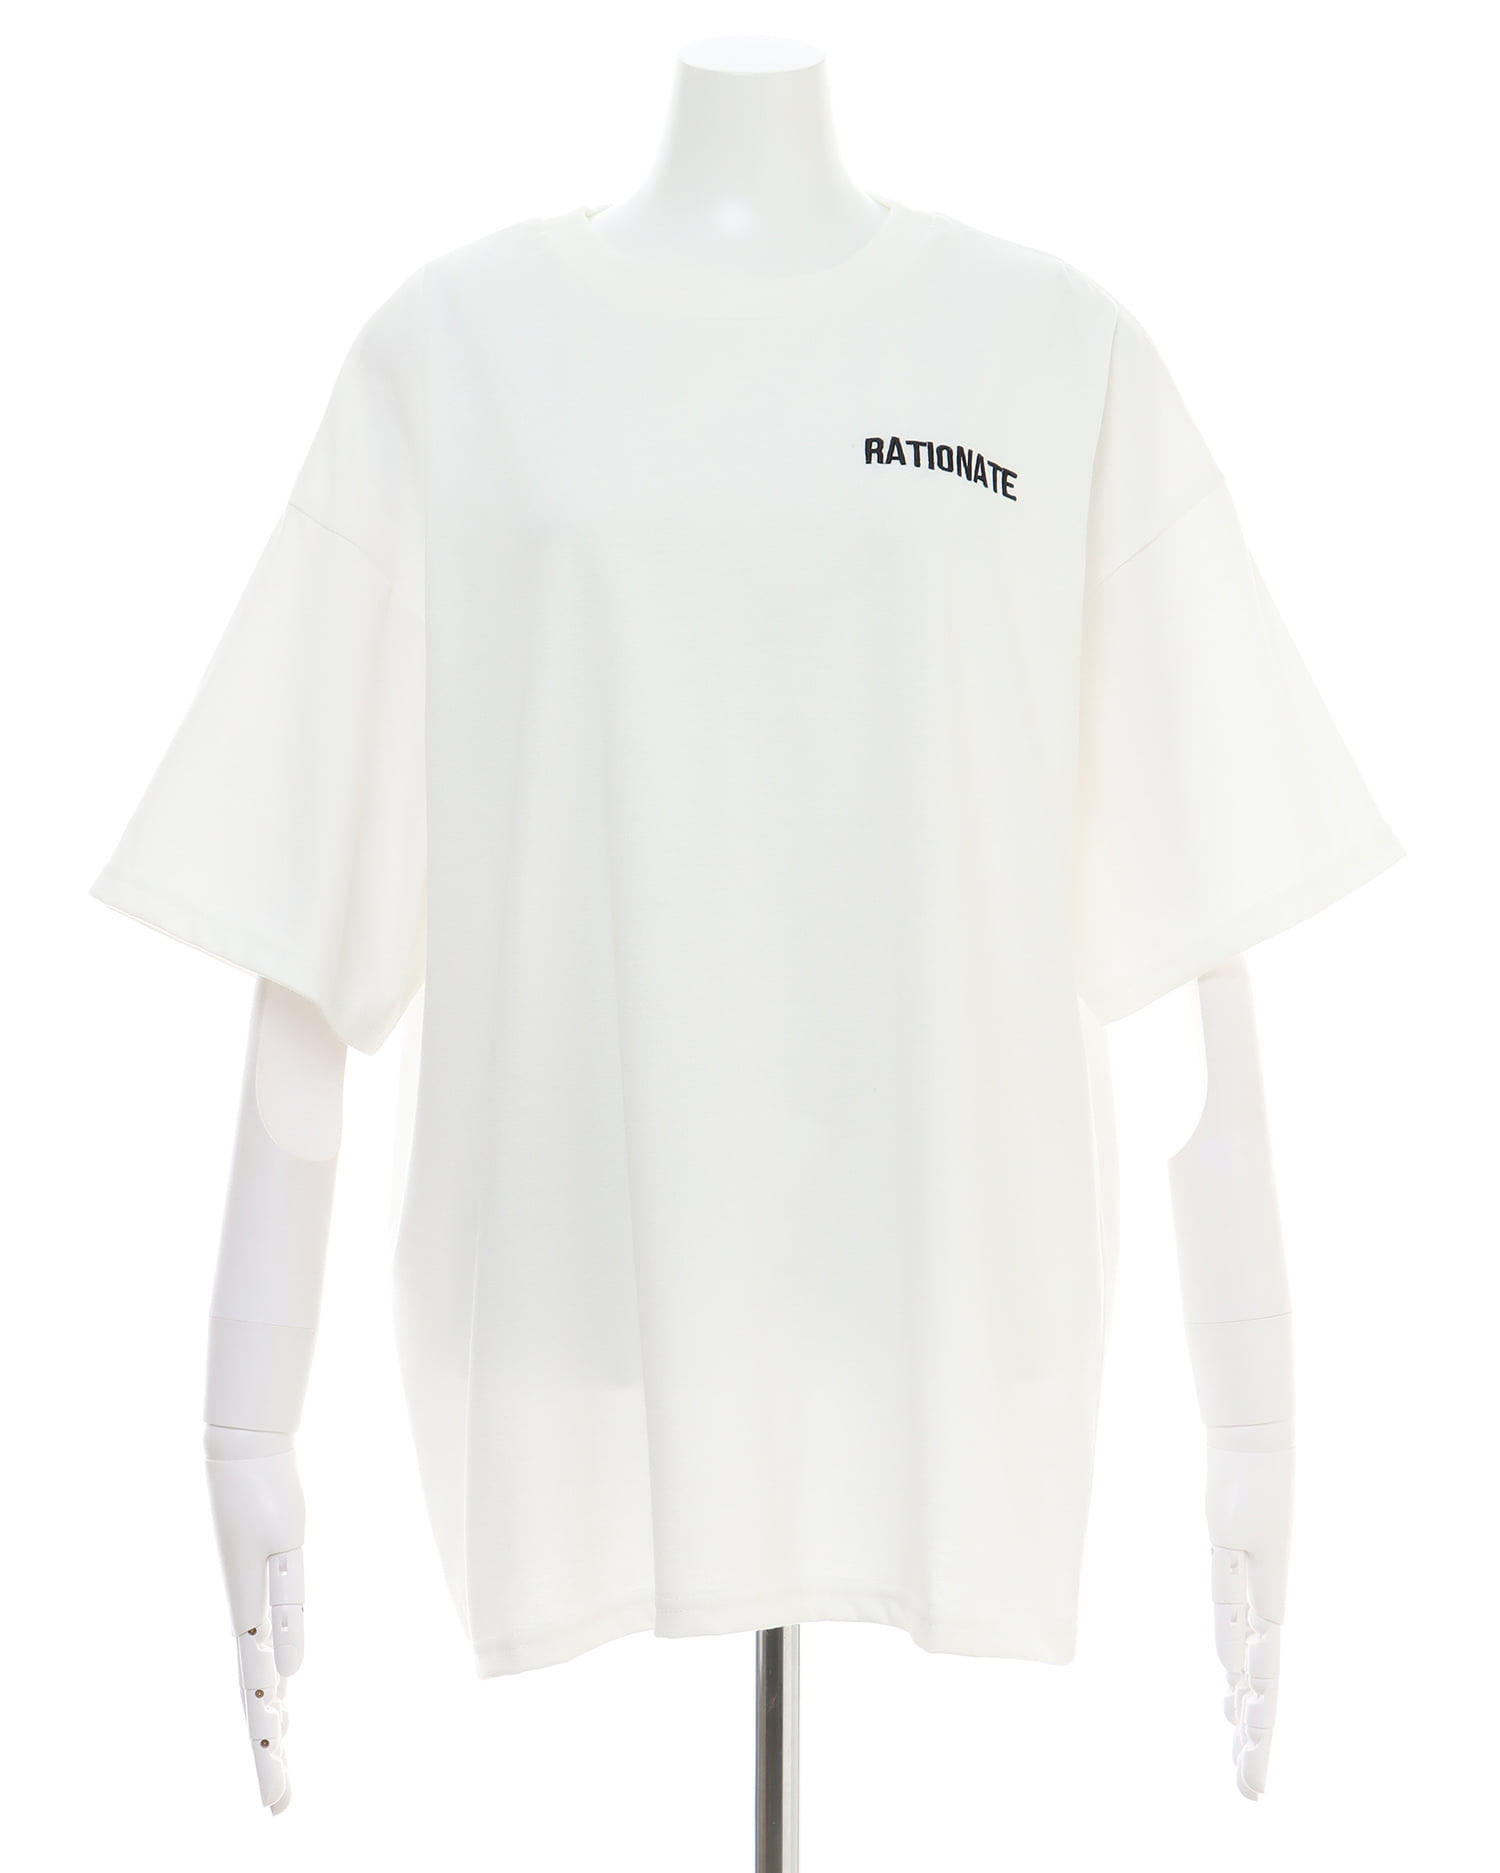 INGNI(イング) BACKペイズリーロゴ半袖Tシャツ - M - オフホワイト/アカ